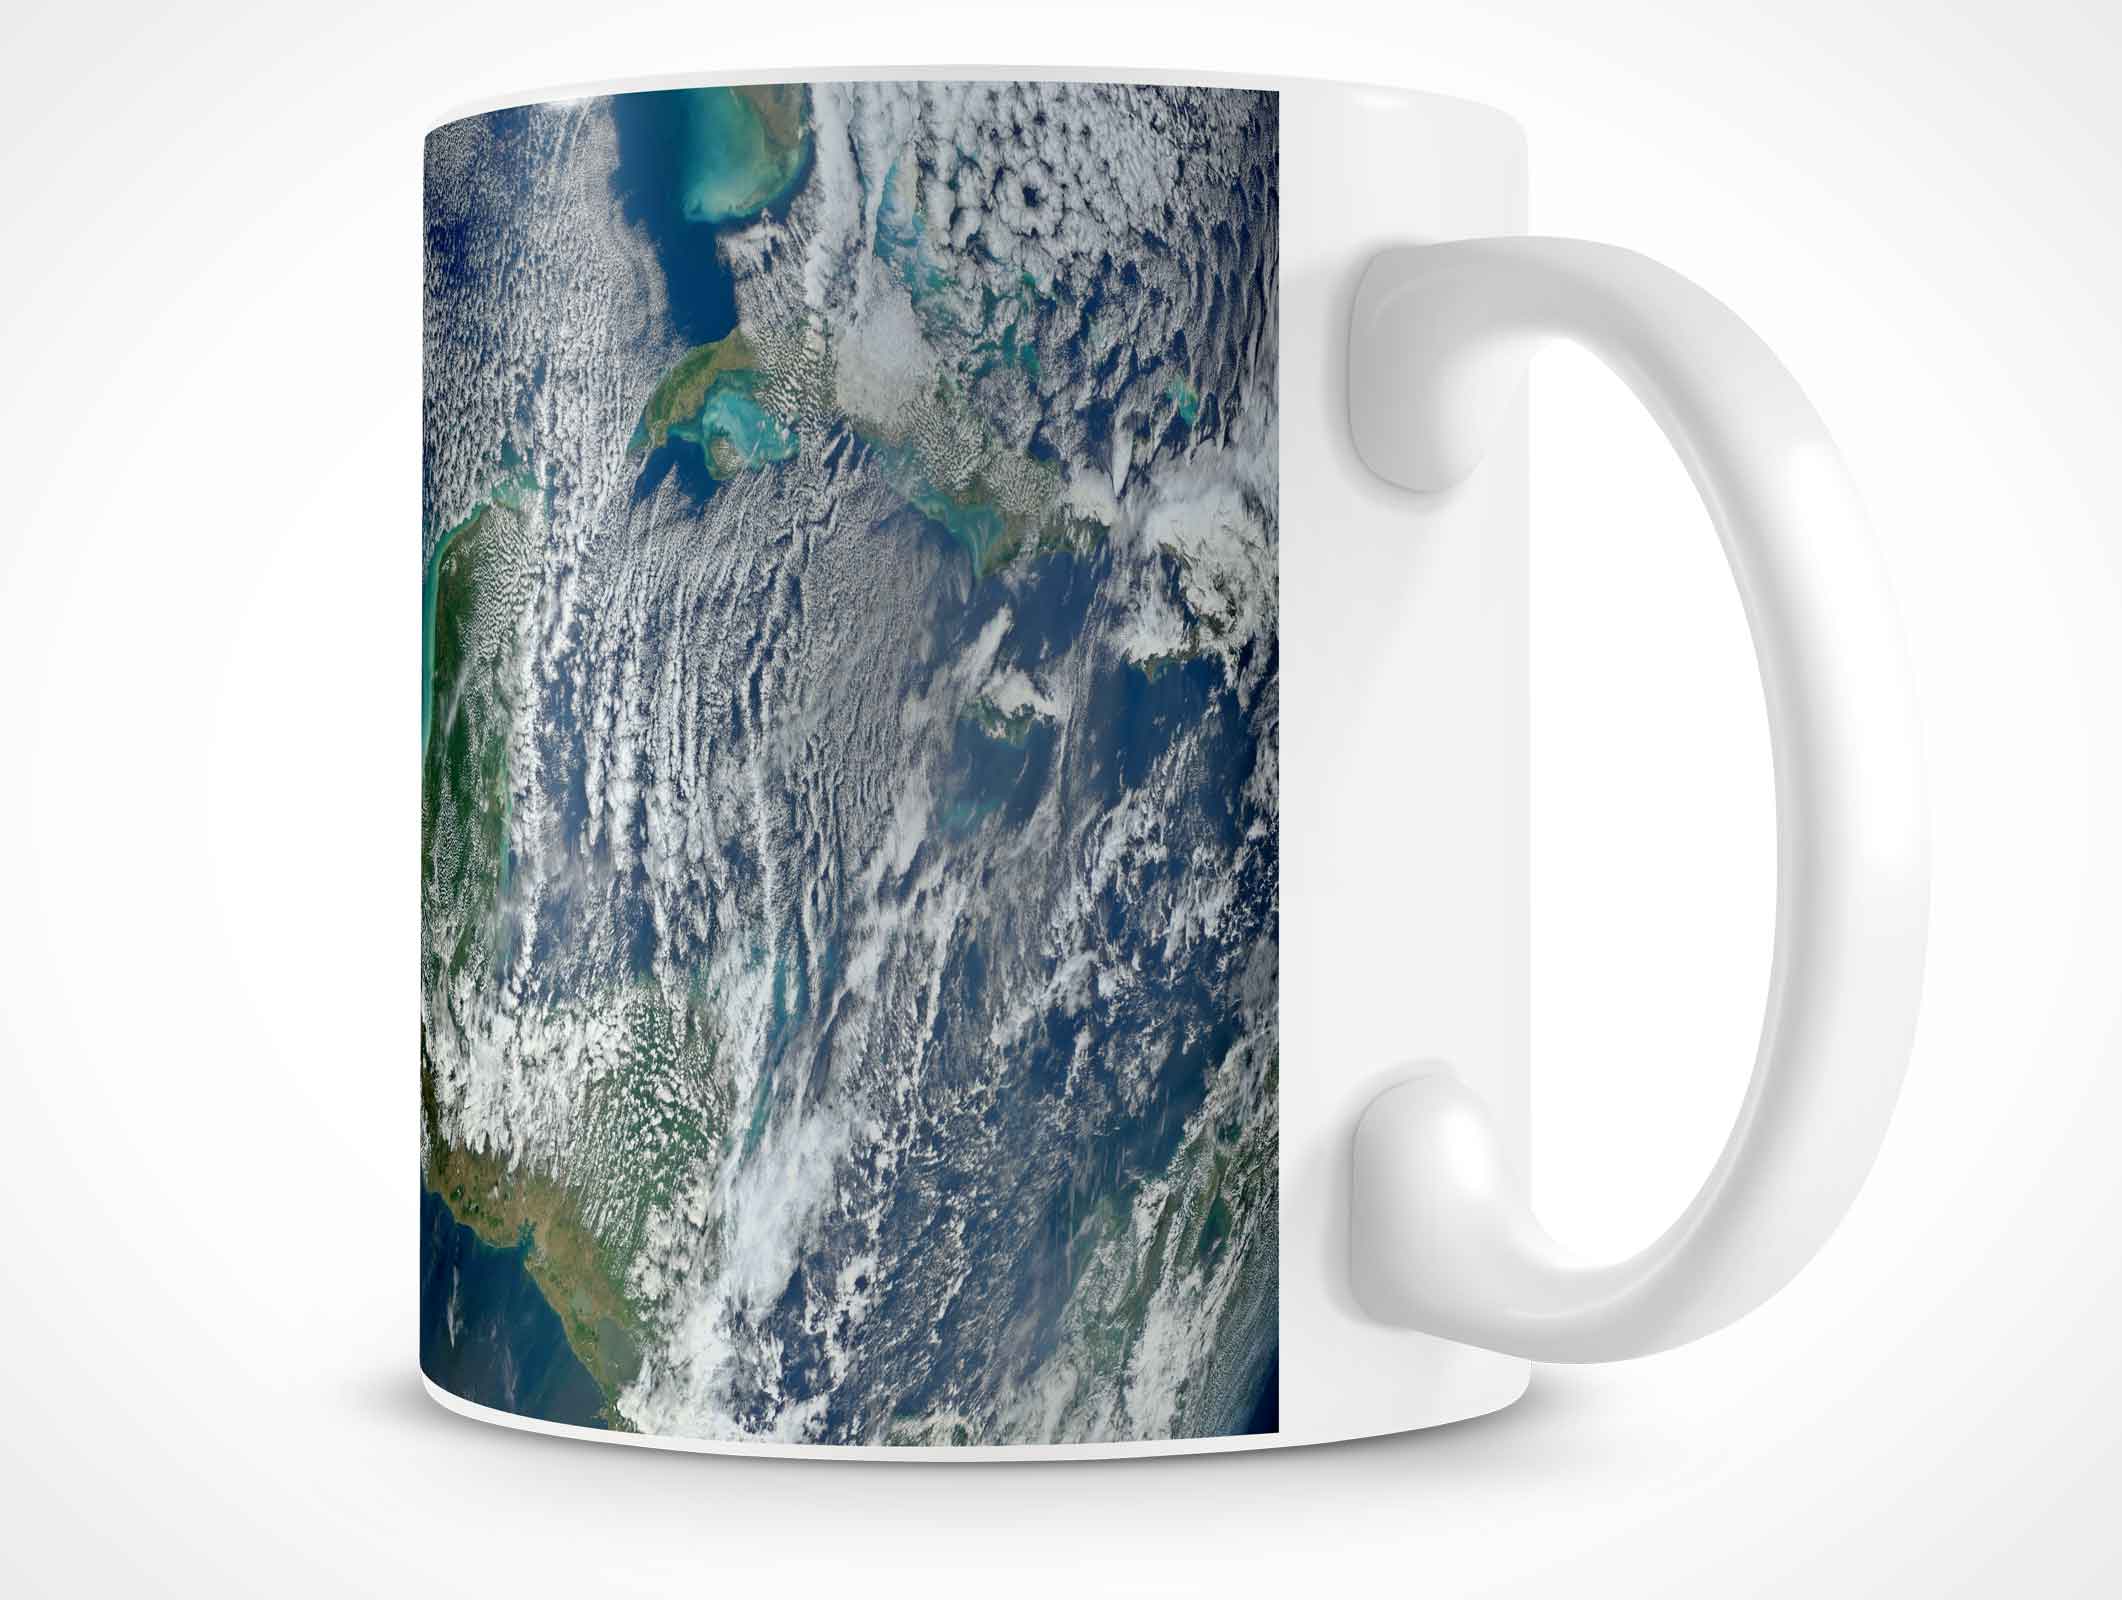 Ceramic Coffee Mug Mockup 3r4